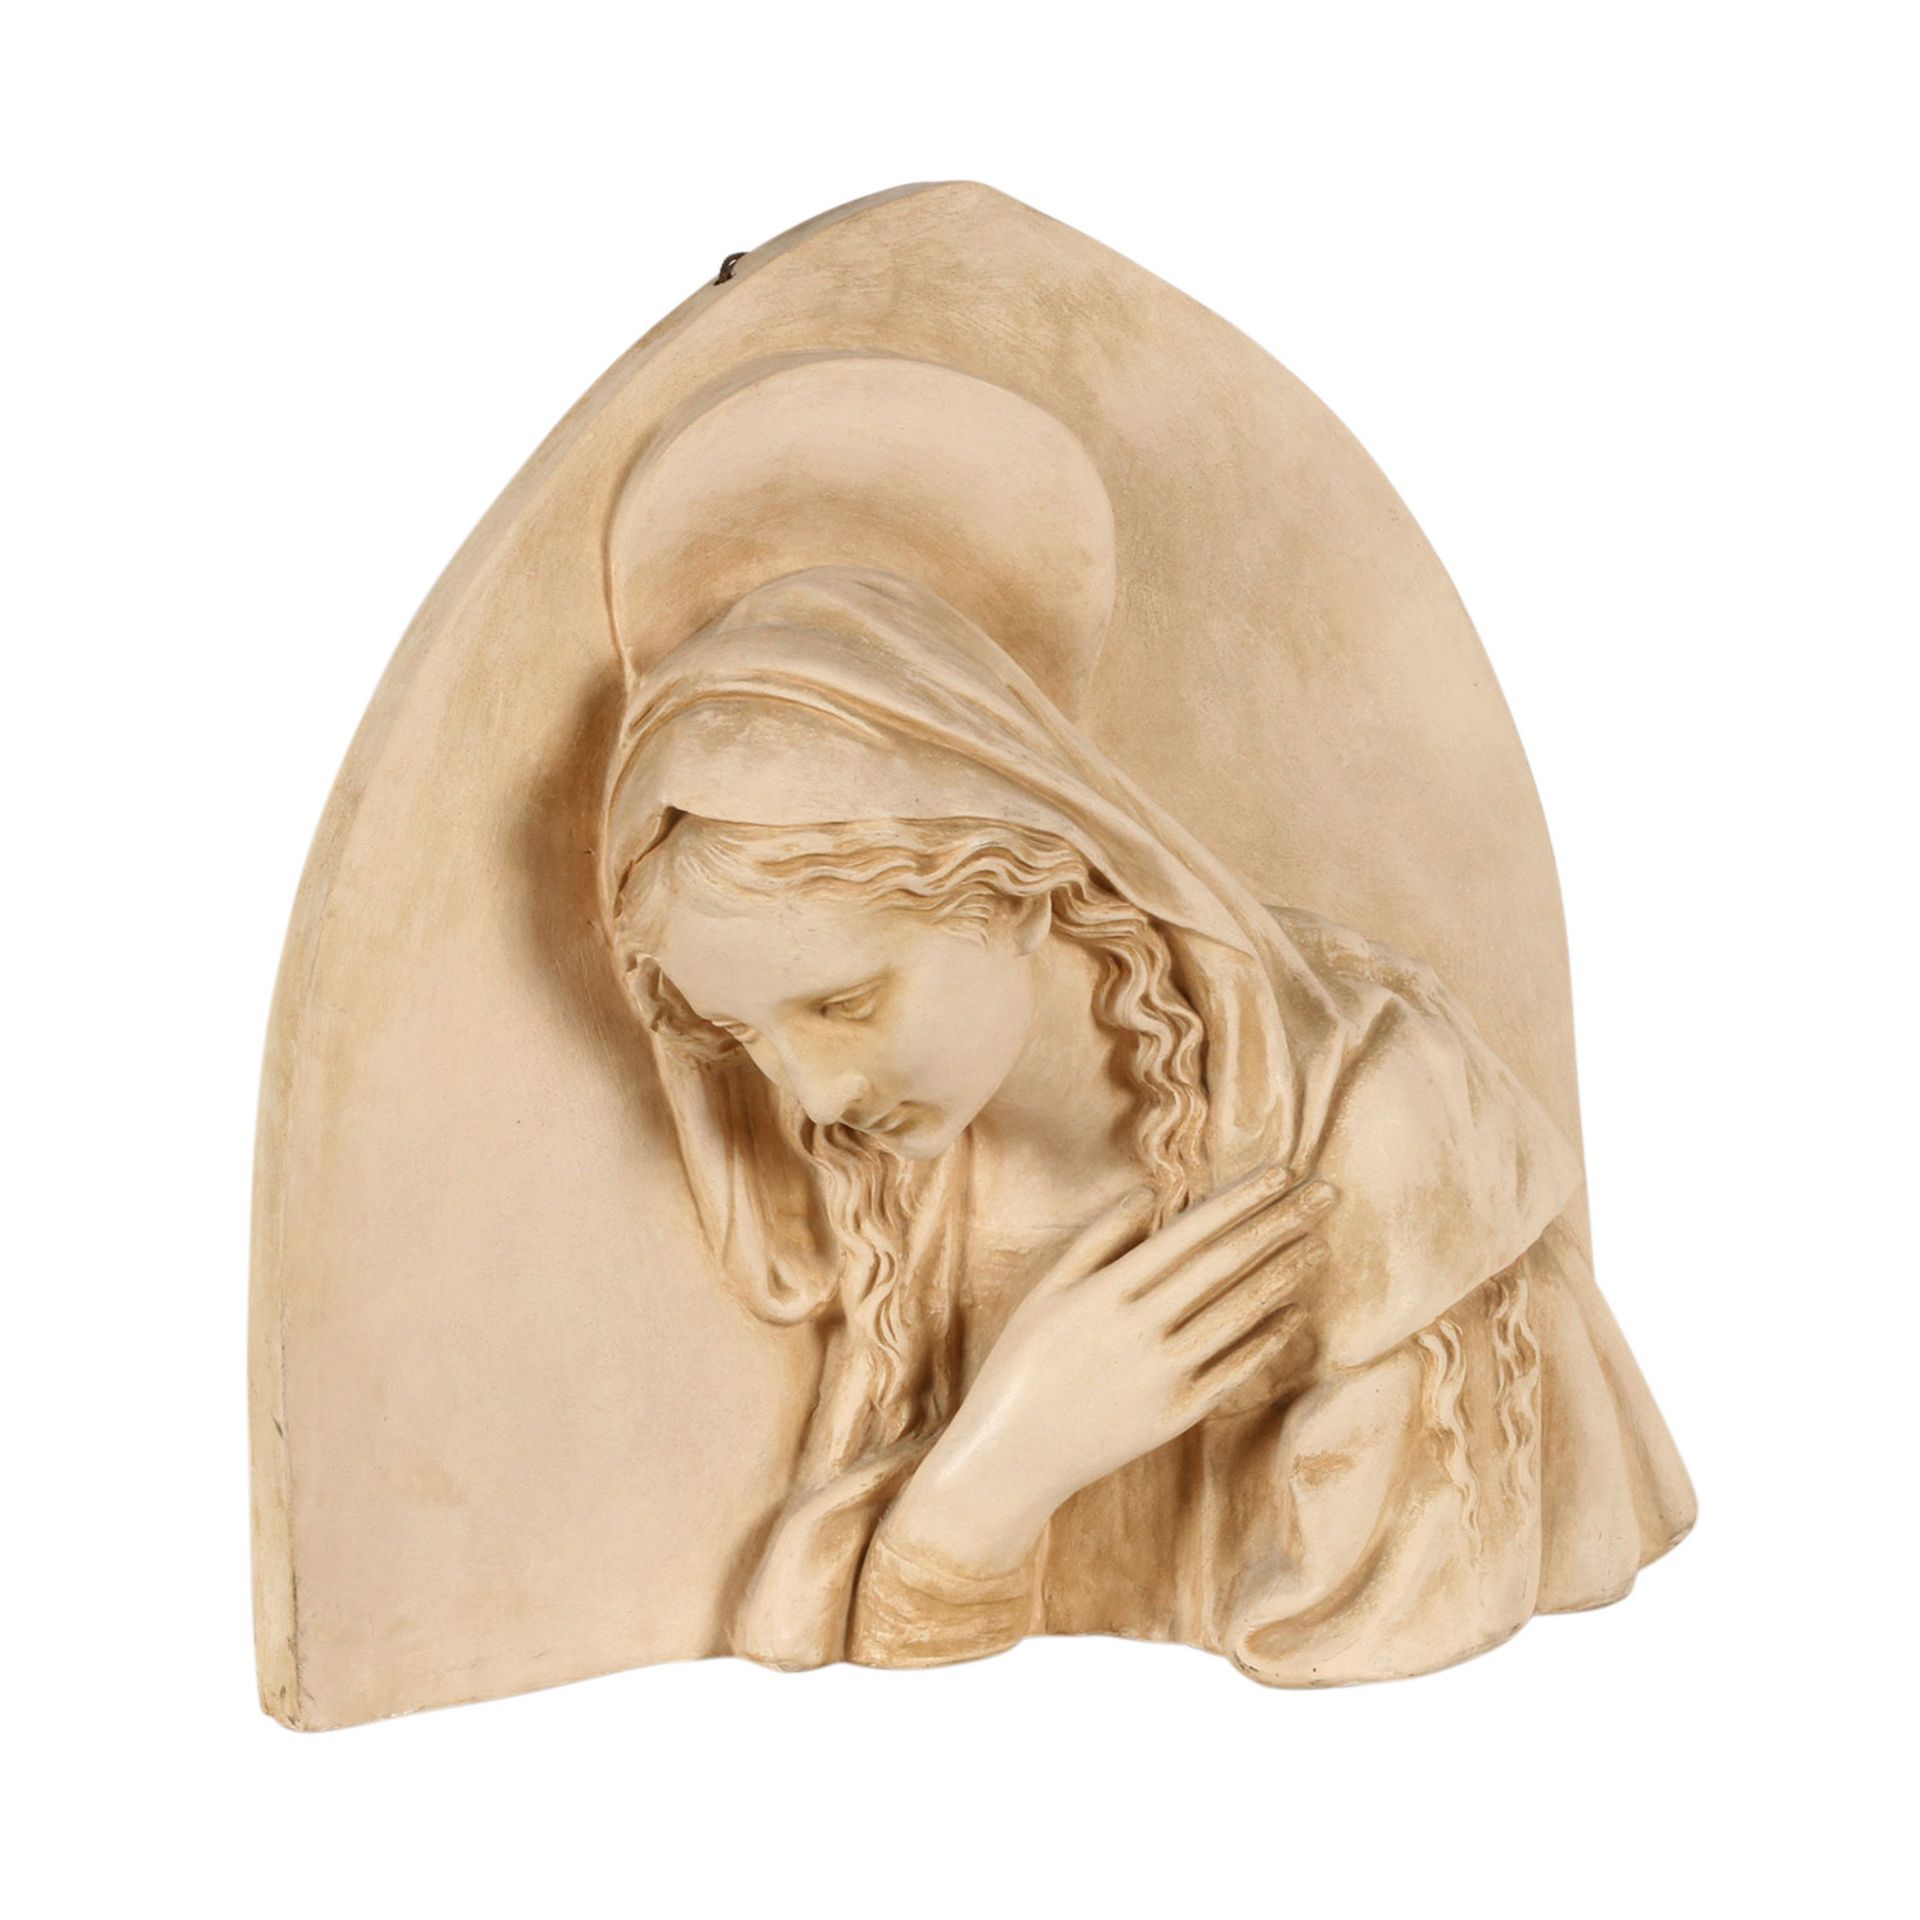 MANUFATTURA DI SIGNA nahe Florenz, Terrakotta-Wandrelief "Madonna", 1. H. 20. Jh.Nach einem